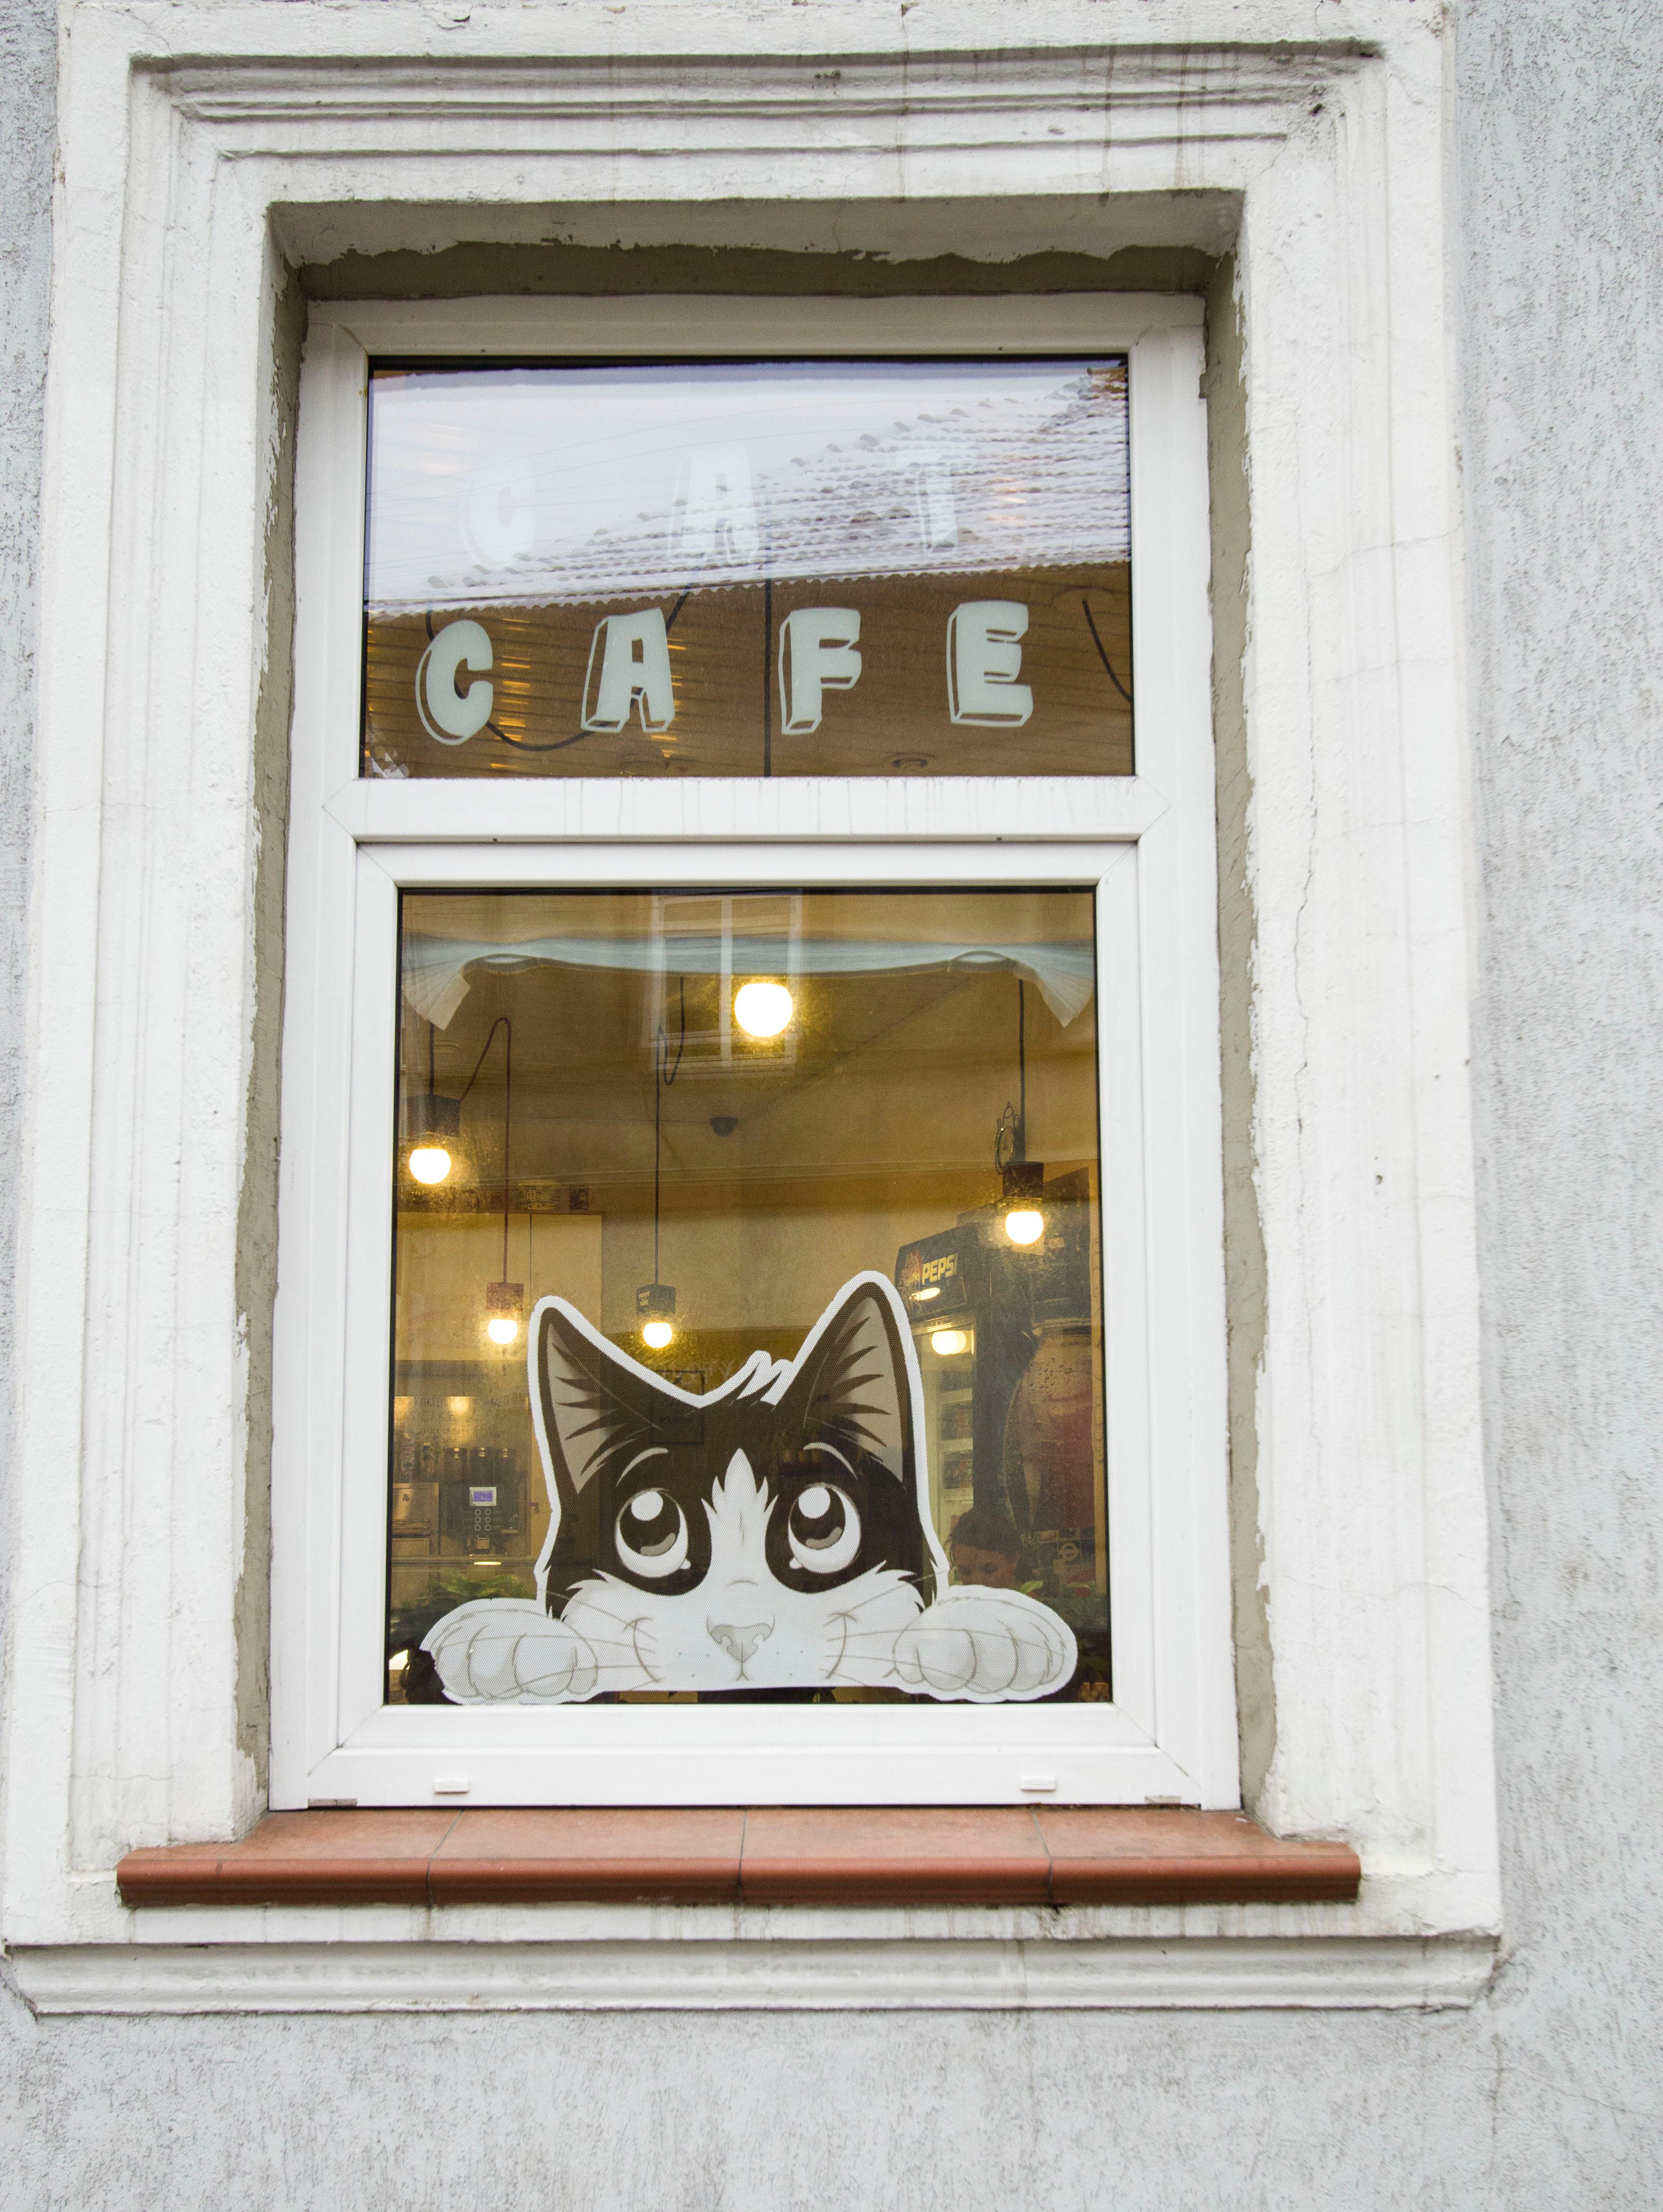 Cover image of this place Murrr Café